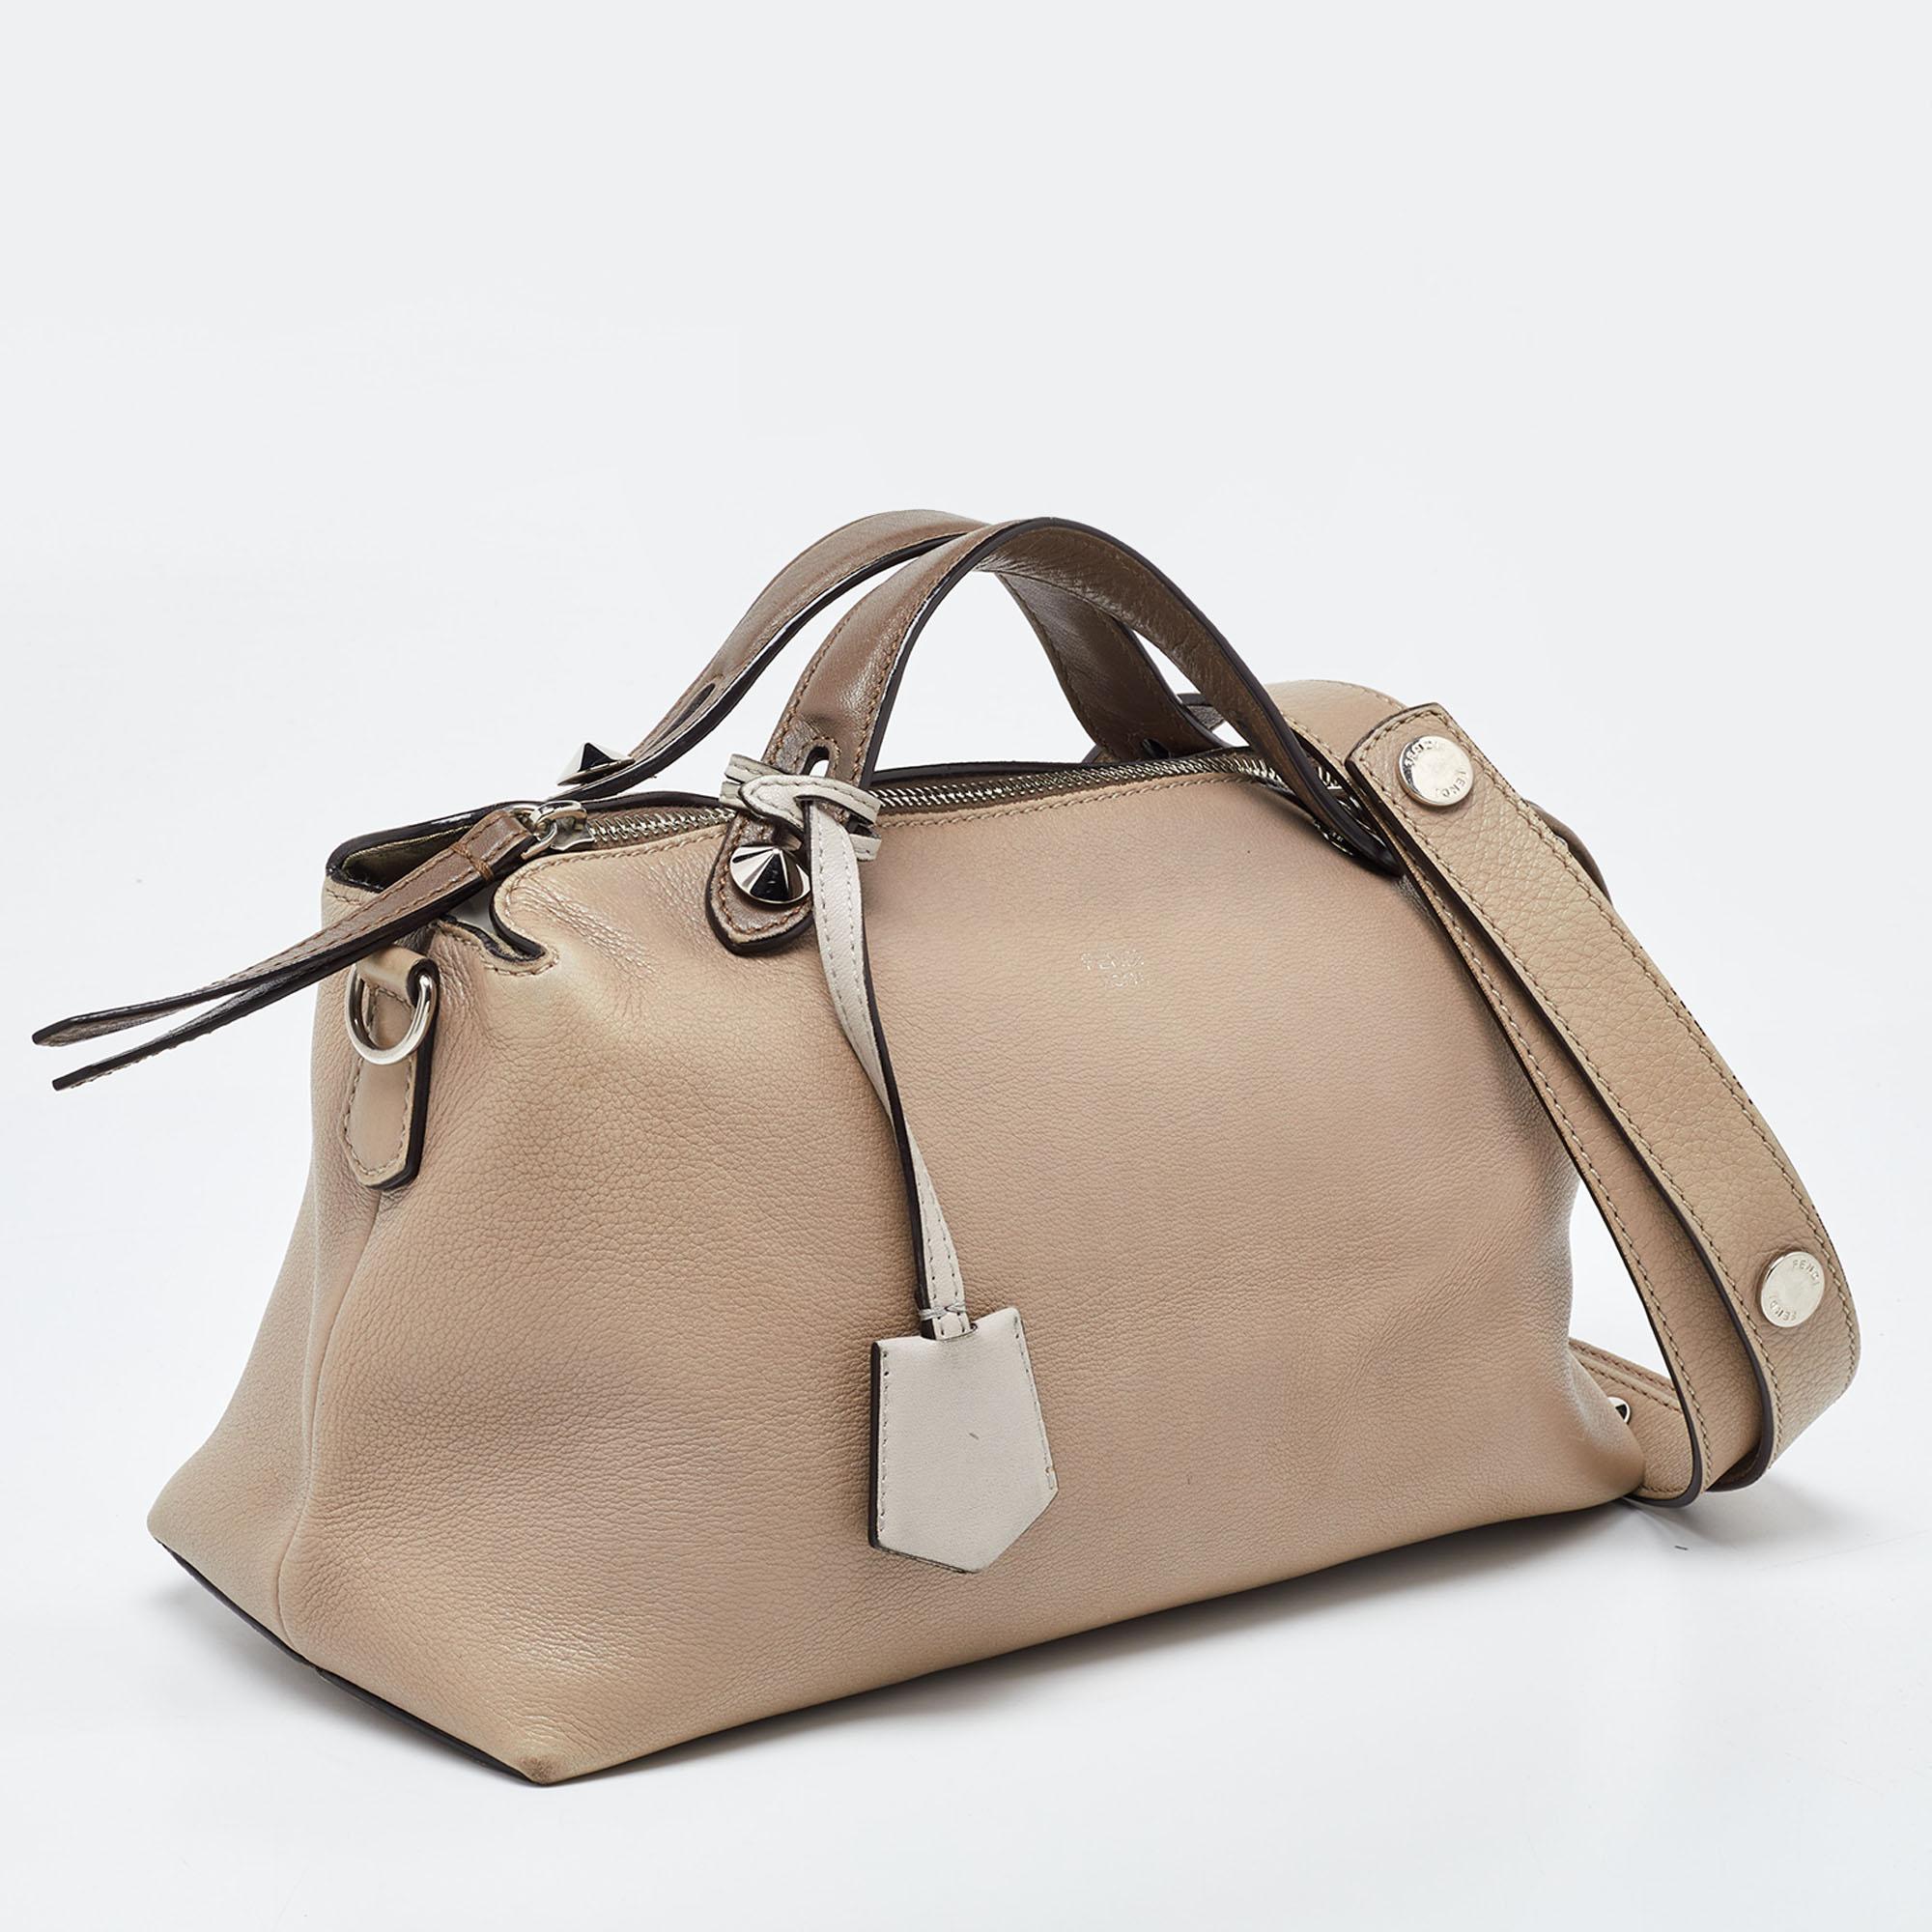 Fendi Two Tone Beige Leather Medium By The Way Bag In Fair Condition For Sale In Dubai, Al Qouz 2